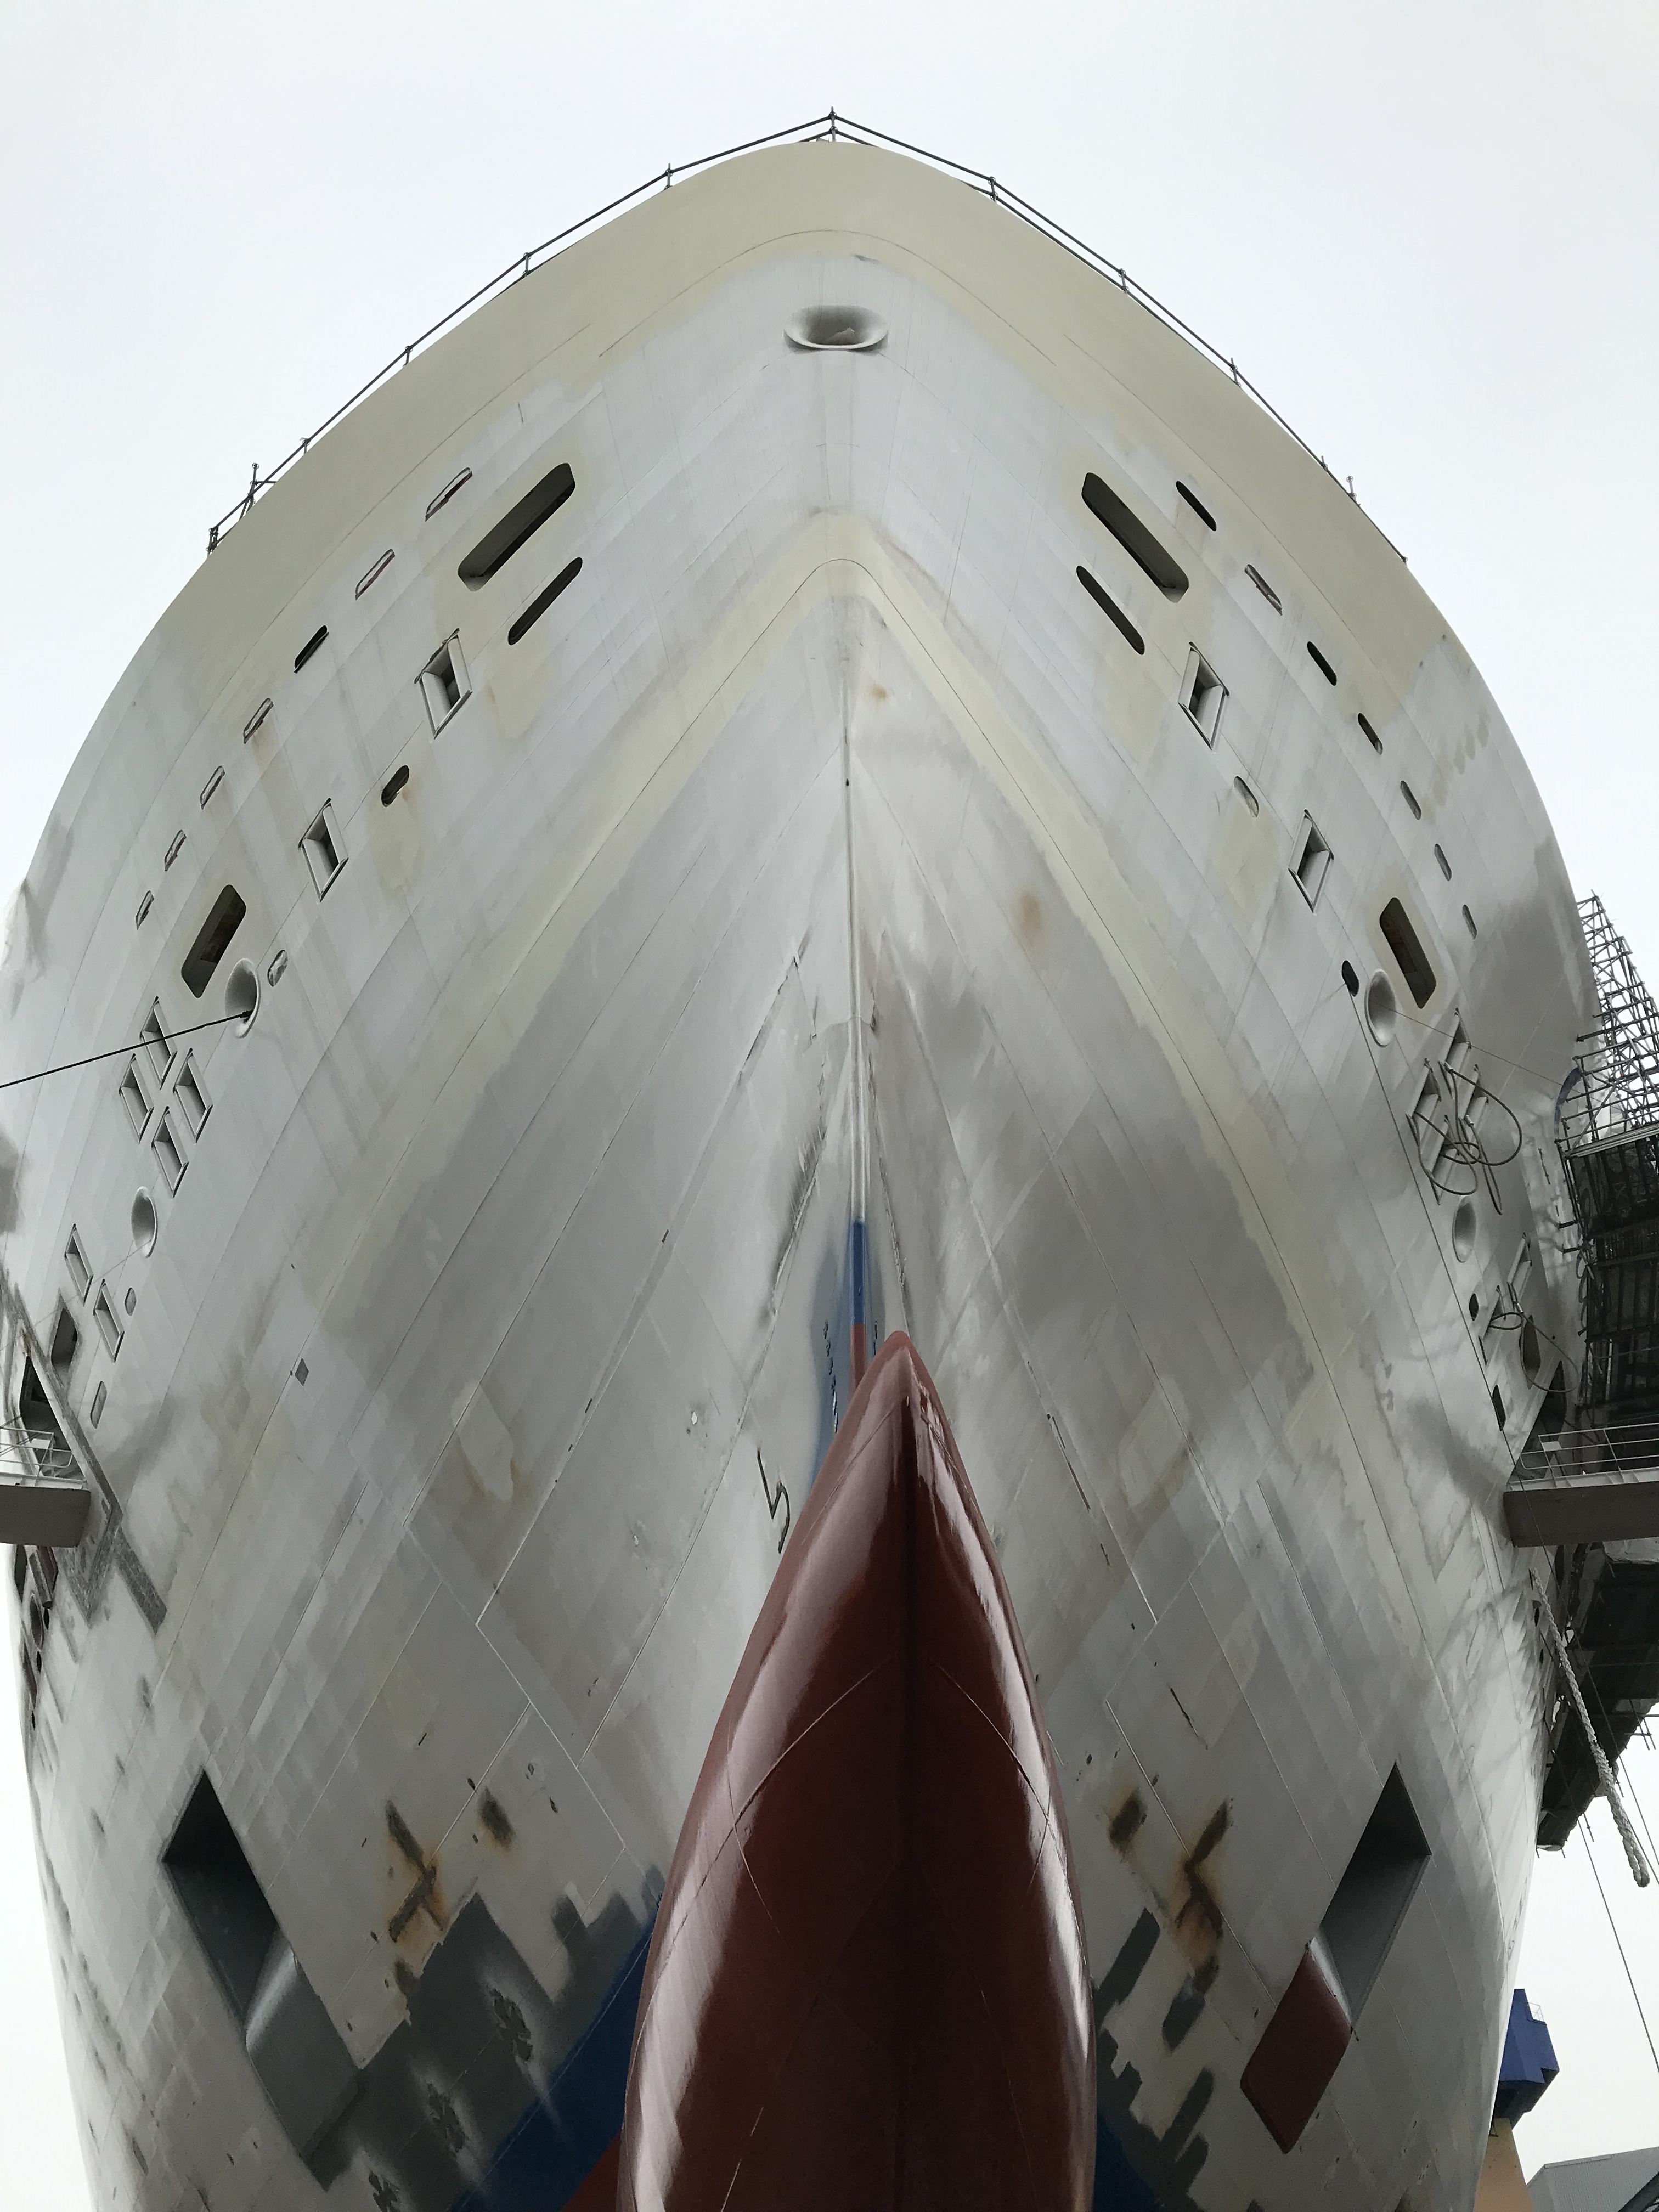 Costa Smeralda, le nouveau navire de Costa Croisières